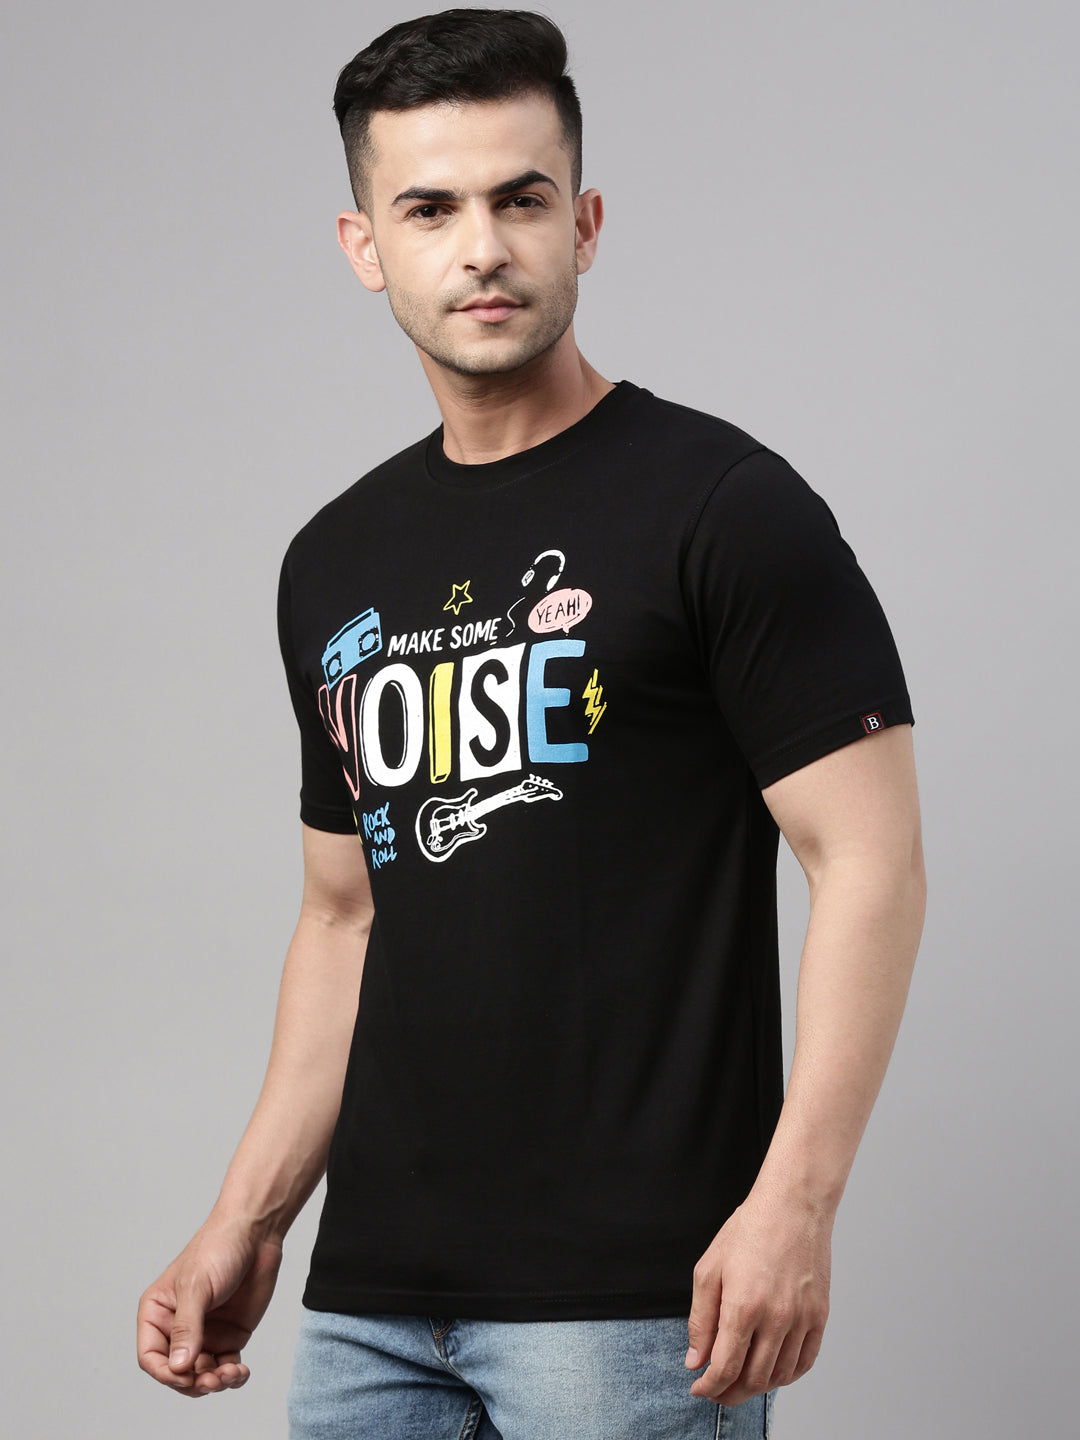 Make Some Noise T Shirt Graphic T-Shirts Bushirt   